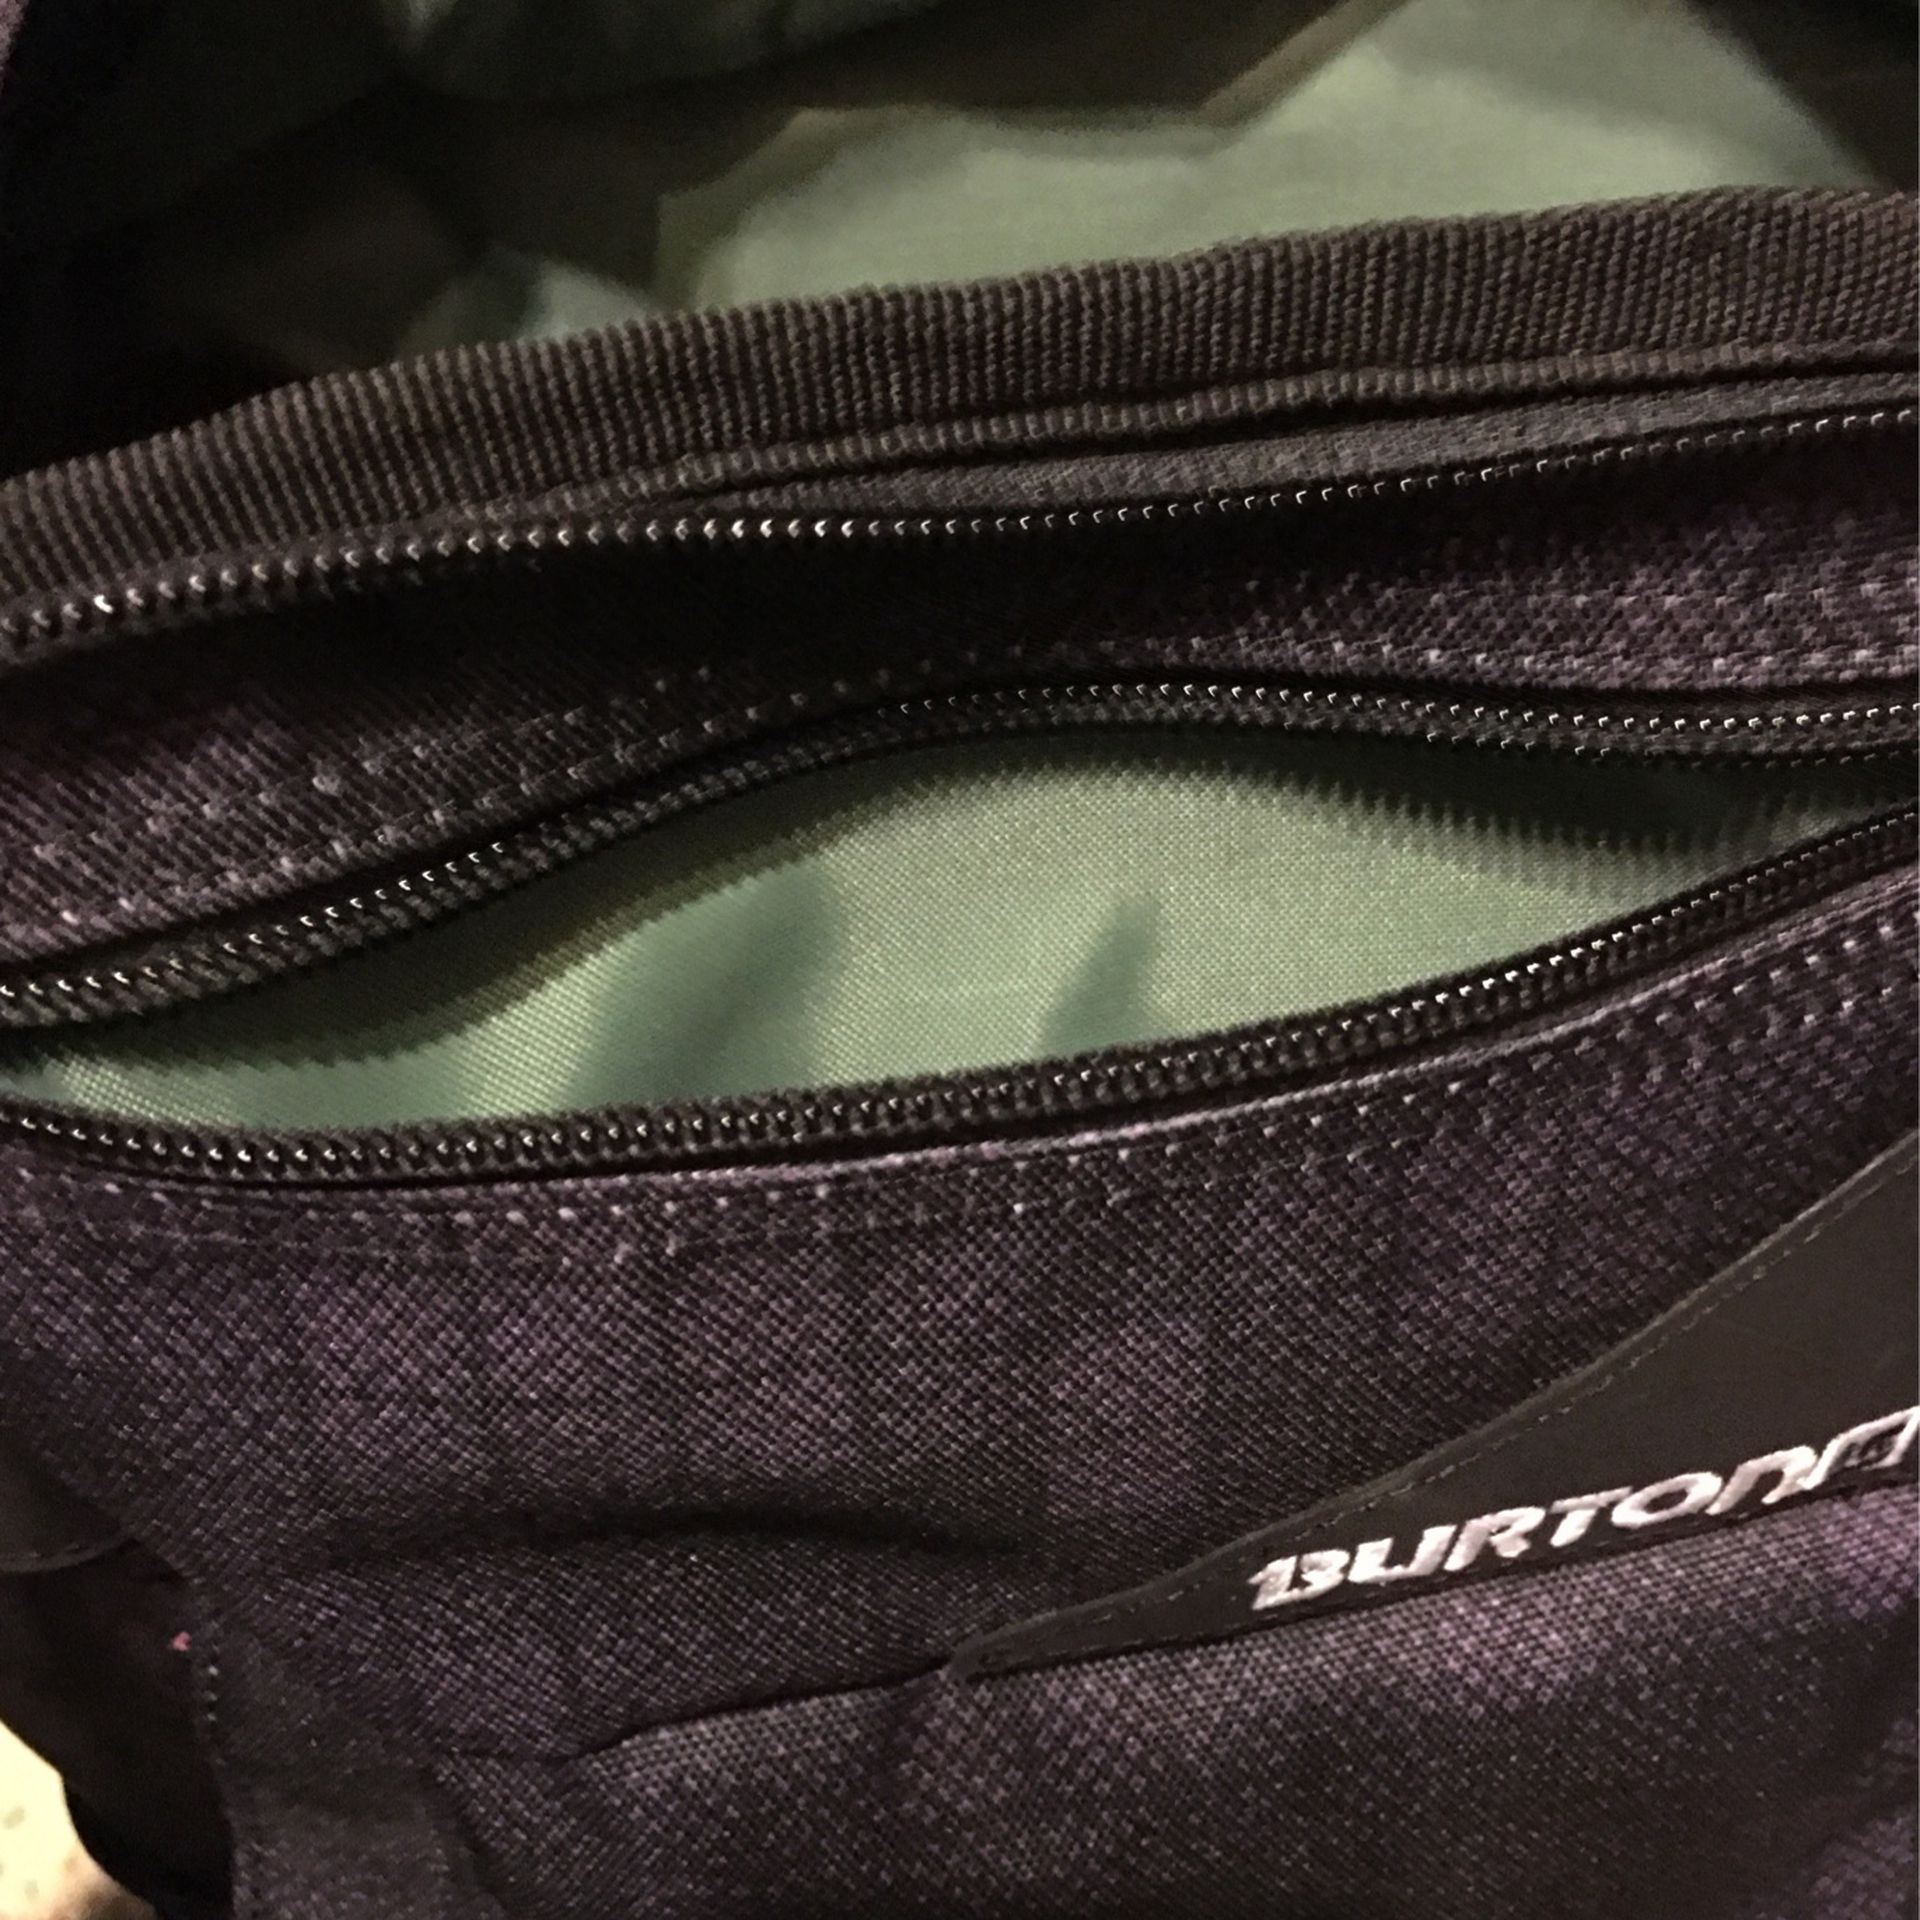 Backpack ‘Burton’ Snowboard Brand  $45